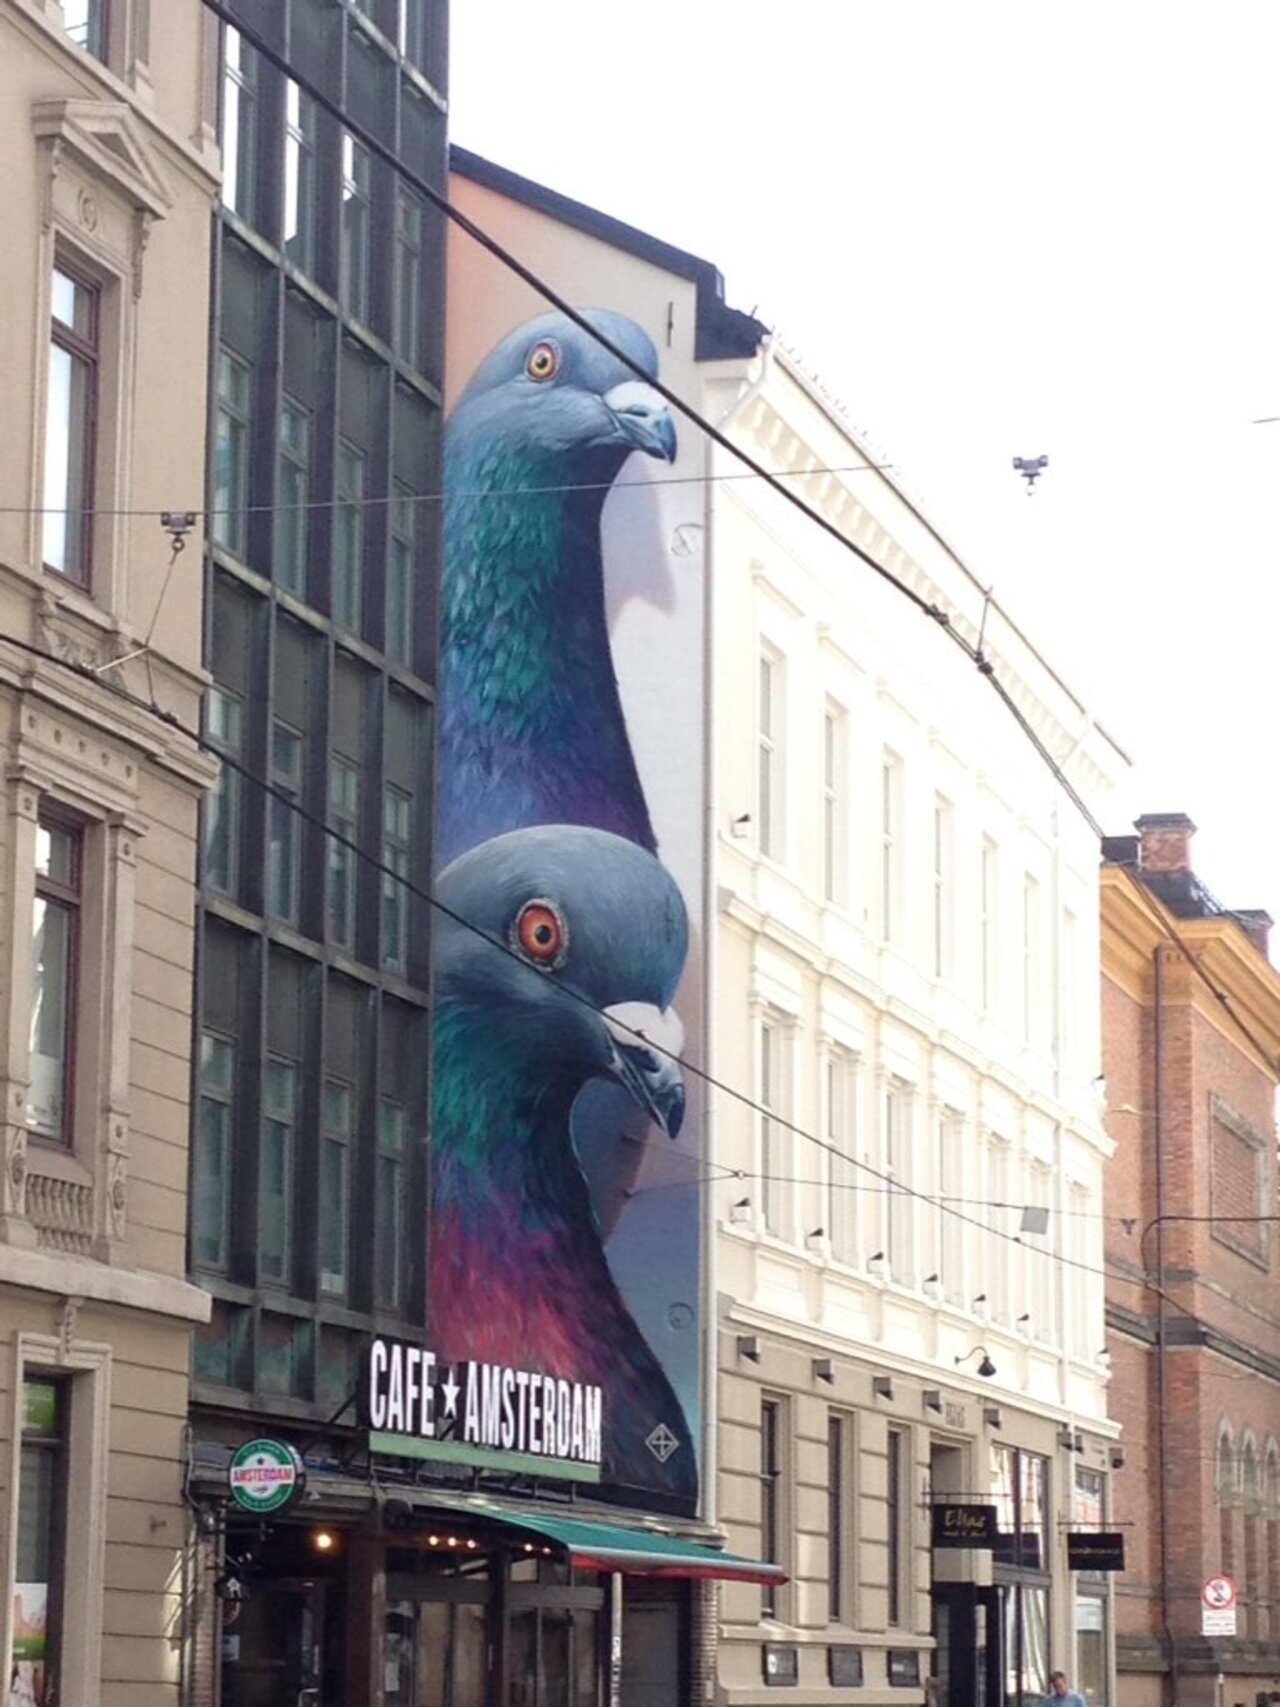 I saw this street art in Oslo last week.  #visitoslo #streetart RT @bobcw https://t.co/sgfpGXwBMA